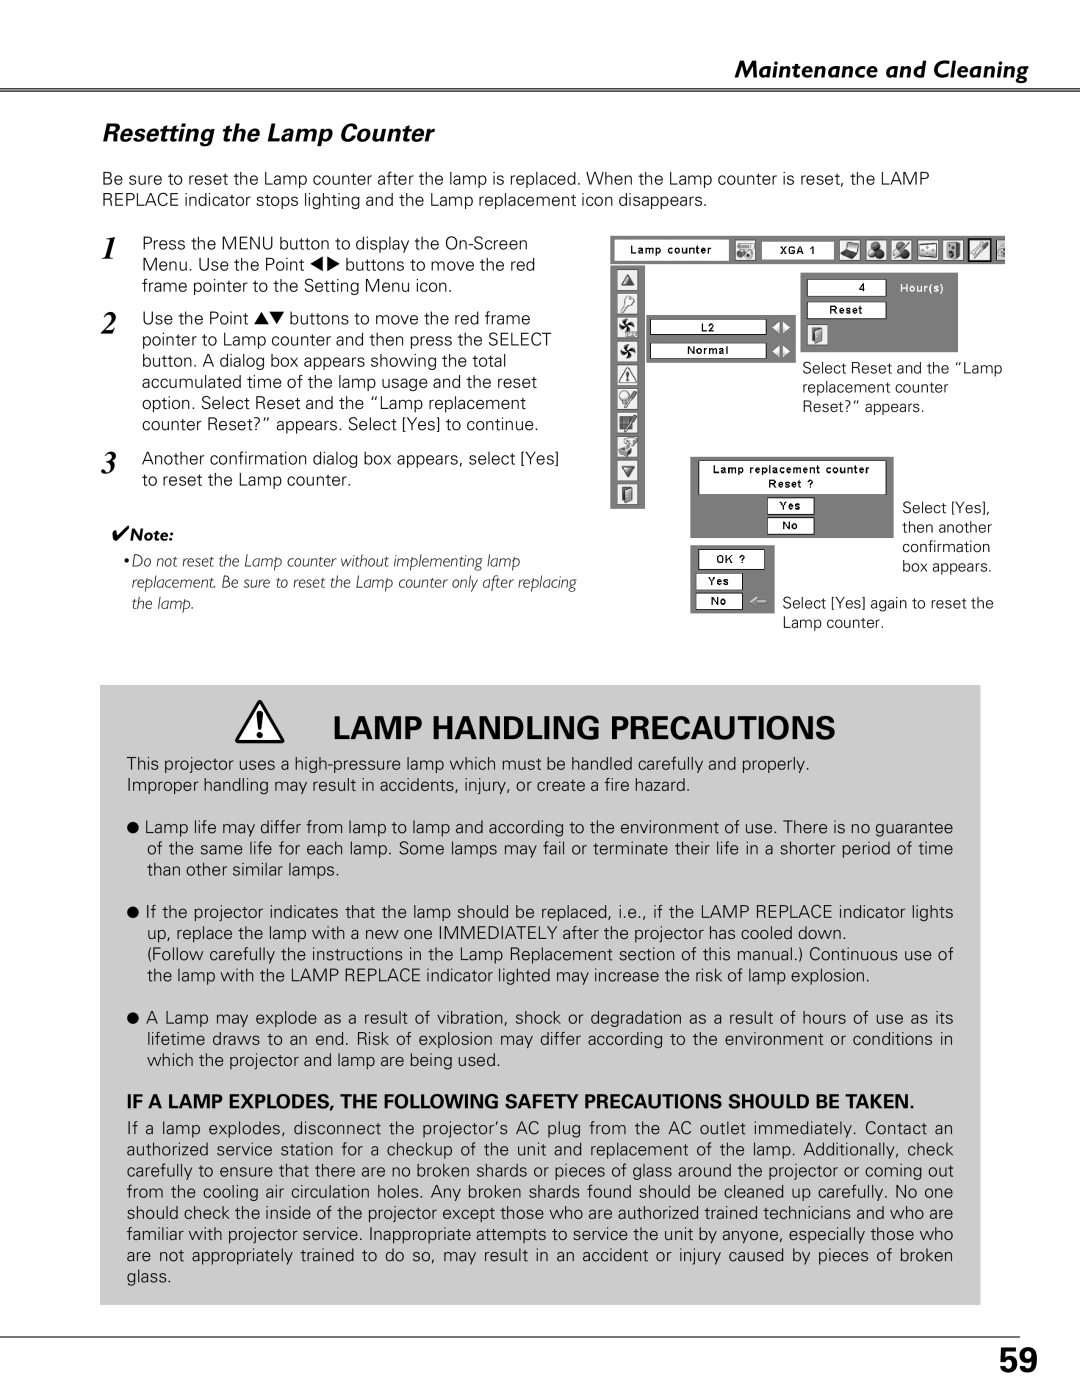 Sanyo PLC-XU84, PLC-XU87 owner manual Maintenance and Cleaning Resetting the Lamp Counter, Lamp Handling Precautions 